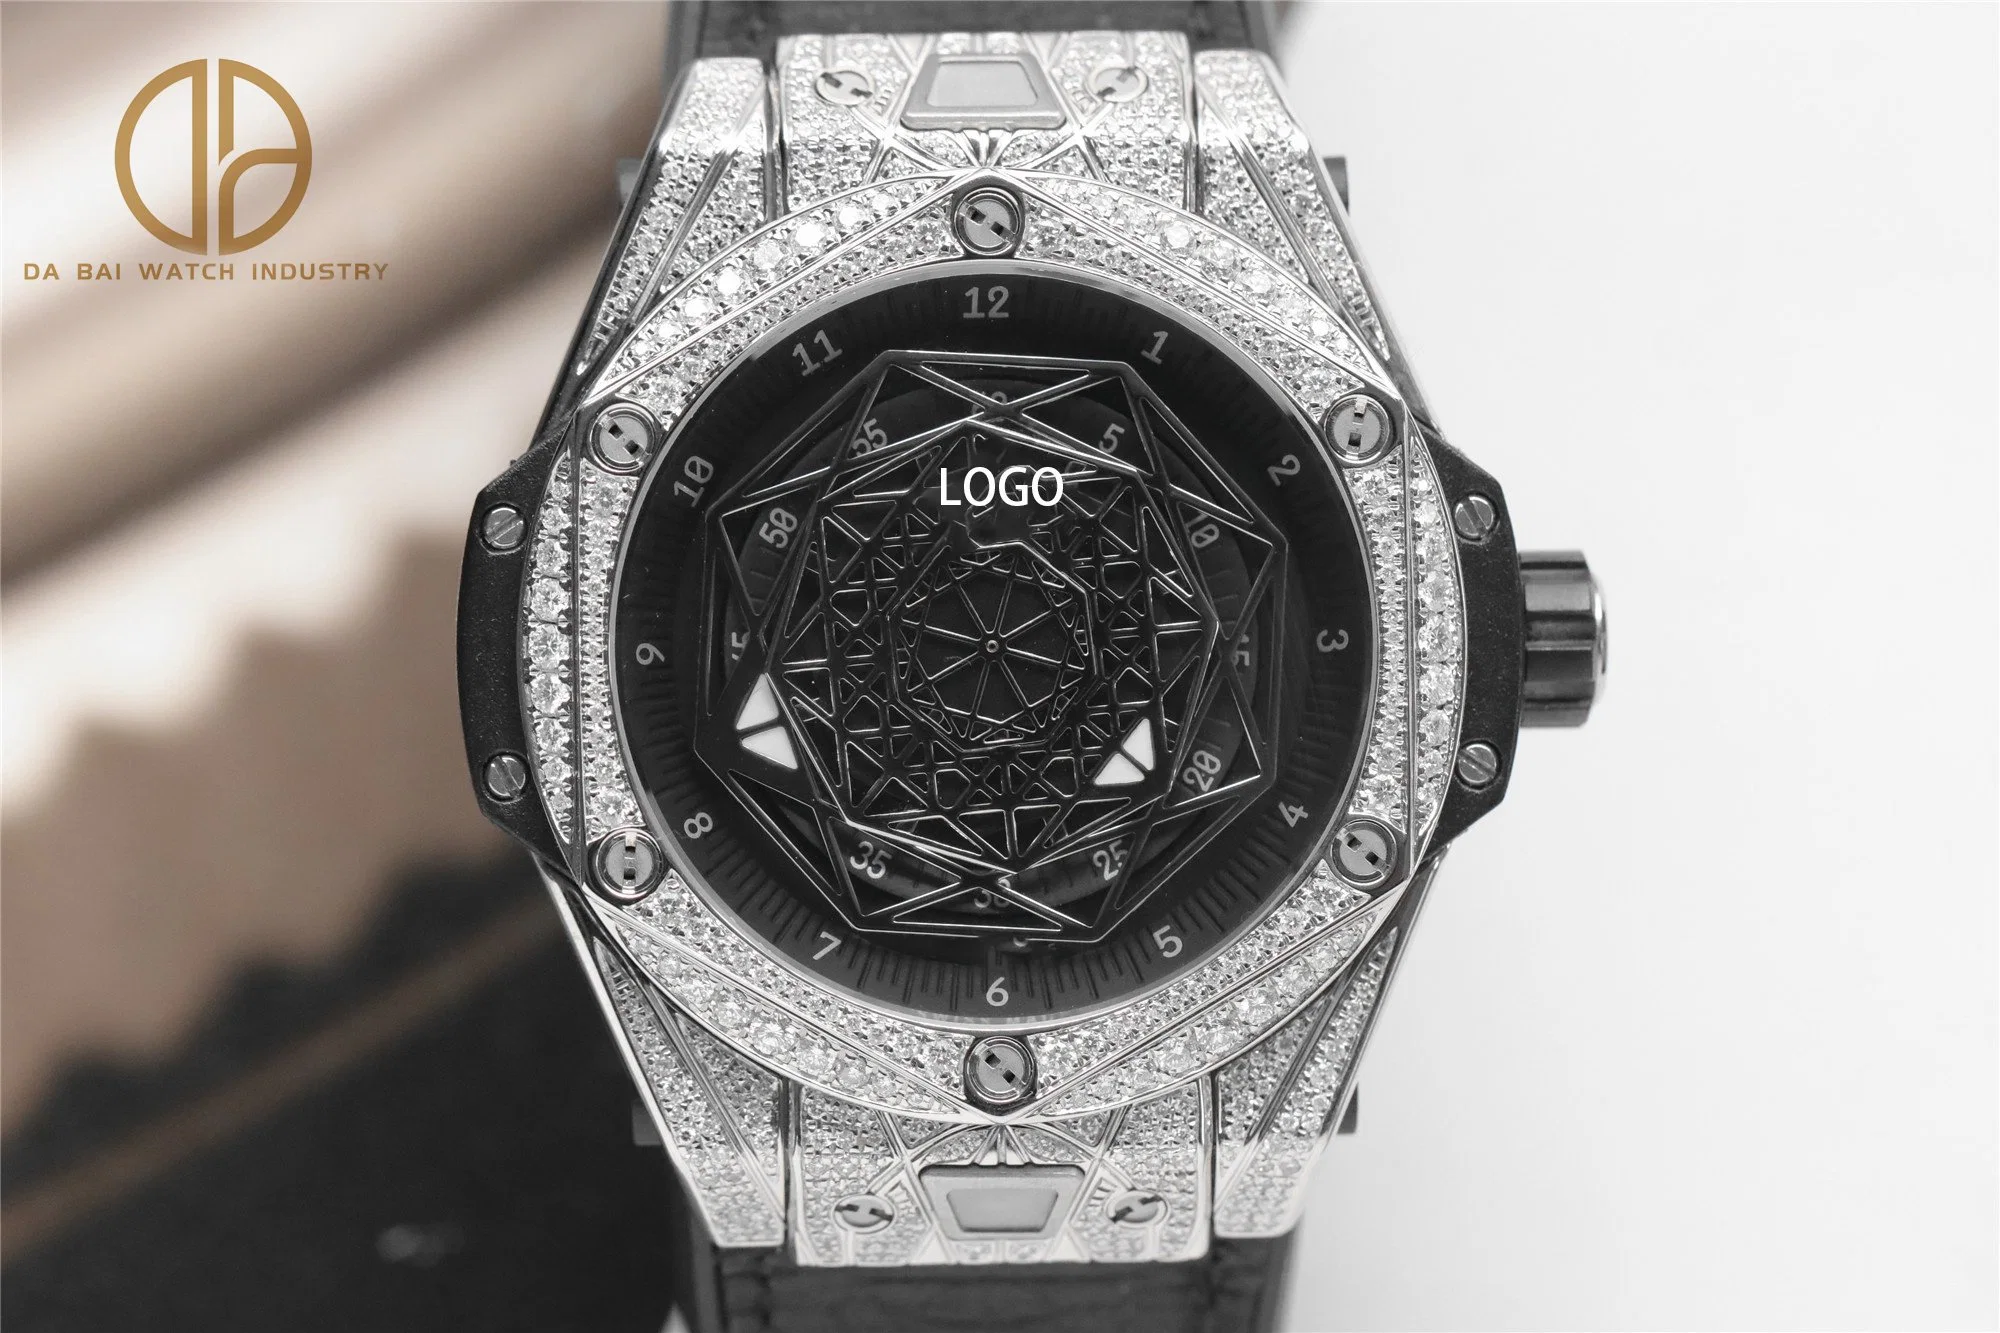 Super Clone Watch 5A Wwf Hb Factory Diamond Inlaid Watch Sports Mechanical Men's Watch, Luxury Titanium Quick Detachable Watch Strap Watch